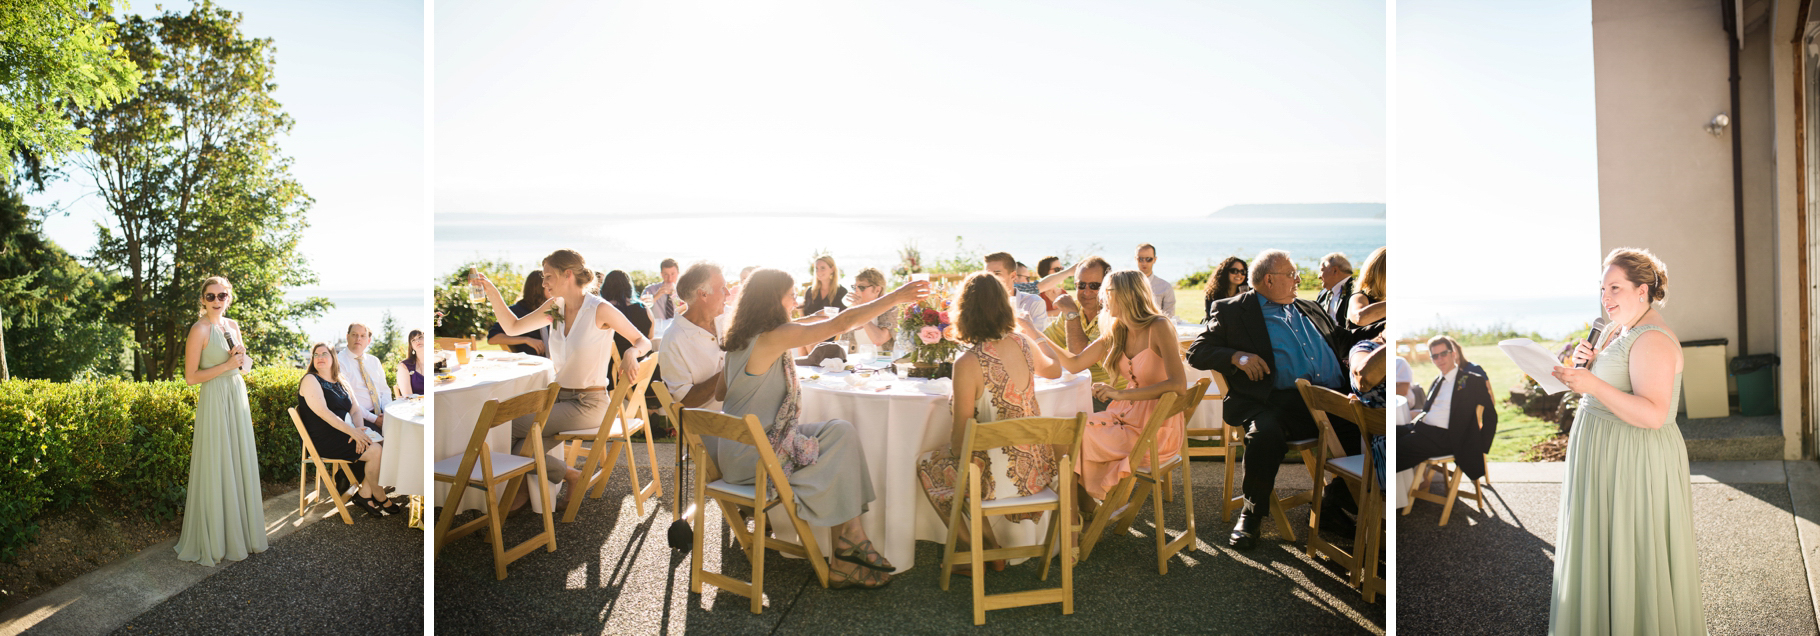 44-toasts-summer-outdoor-reception-edmonds-seattle-wedding-photographer-olympics-waterfront